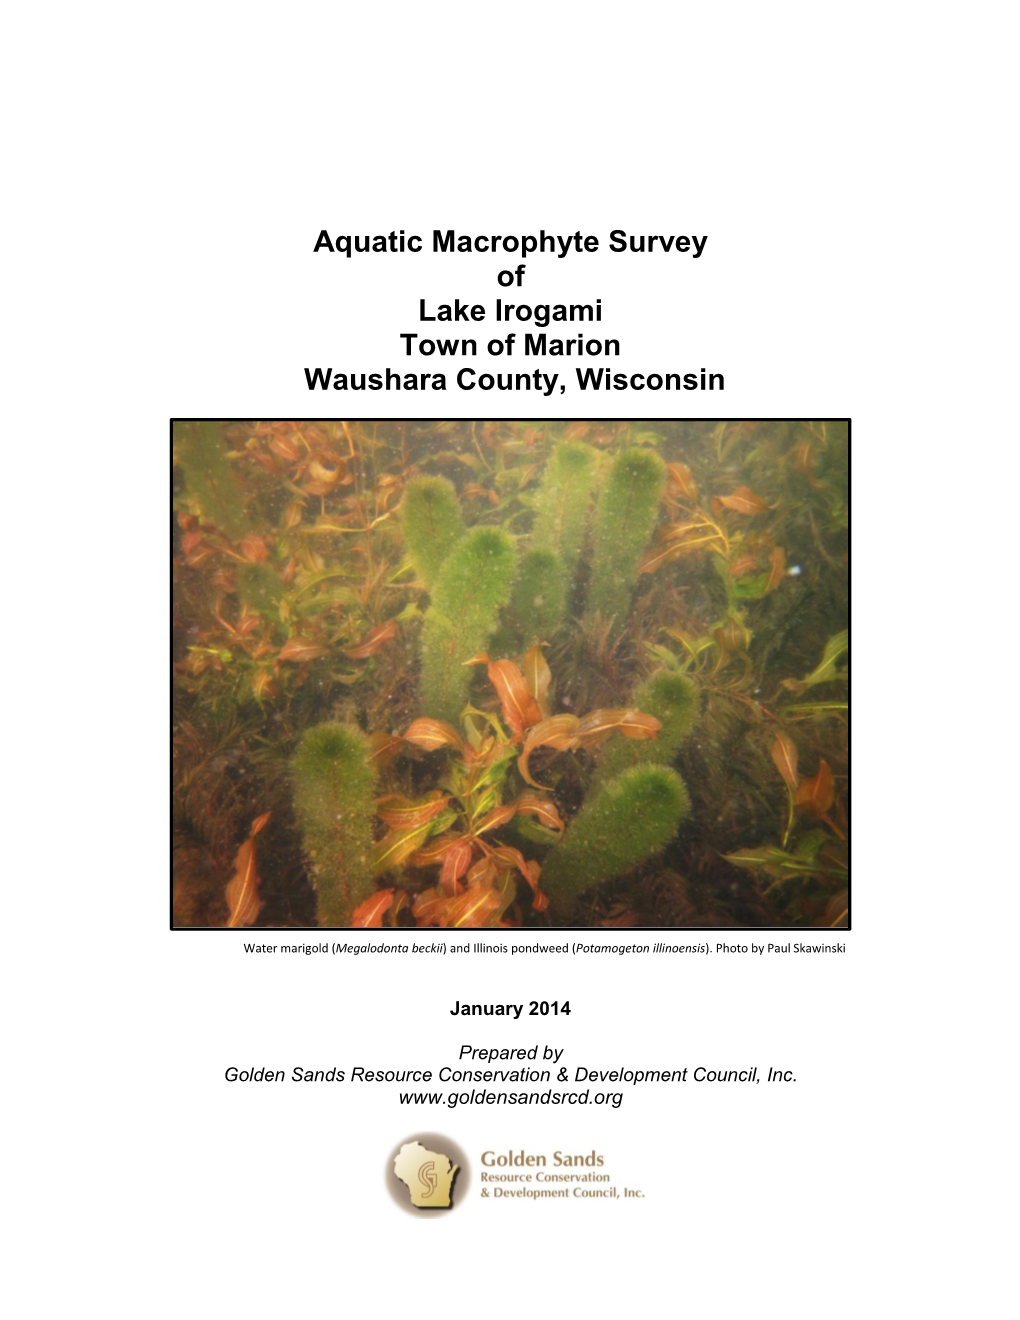 Aquatic Macrophyte Survey of Lake Irogami Town of Marion Waushara County, Wisconsin